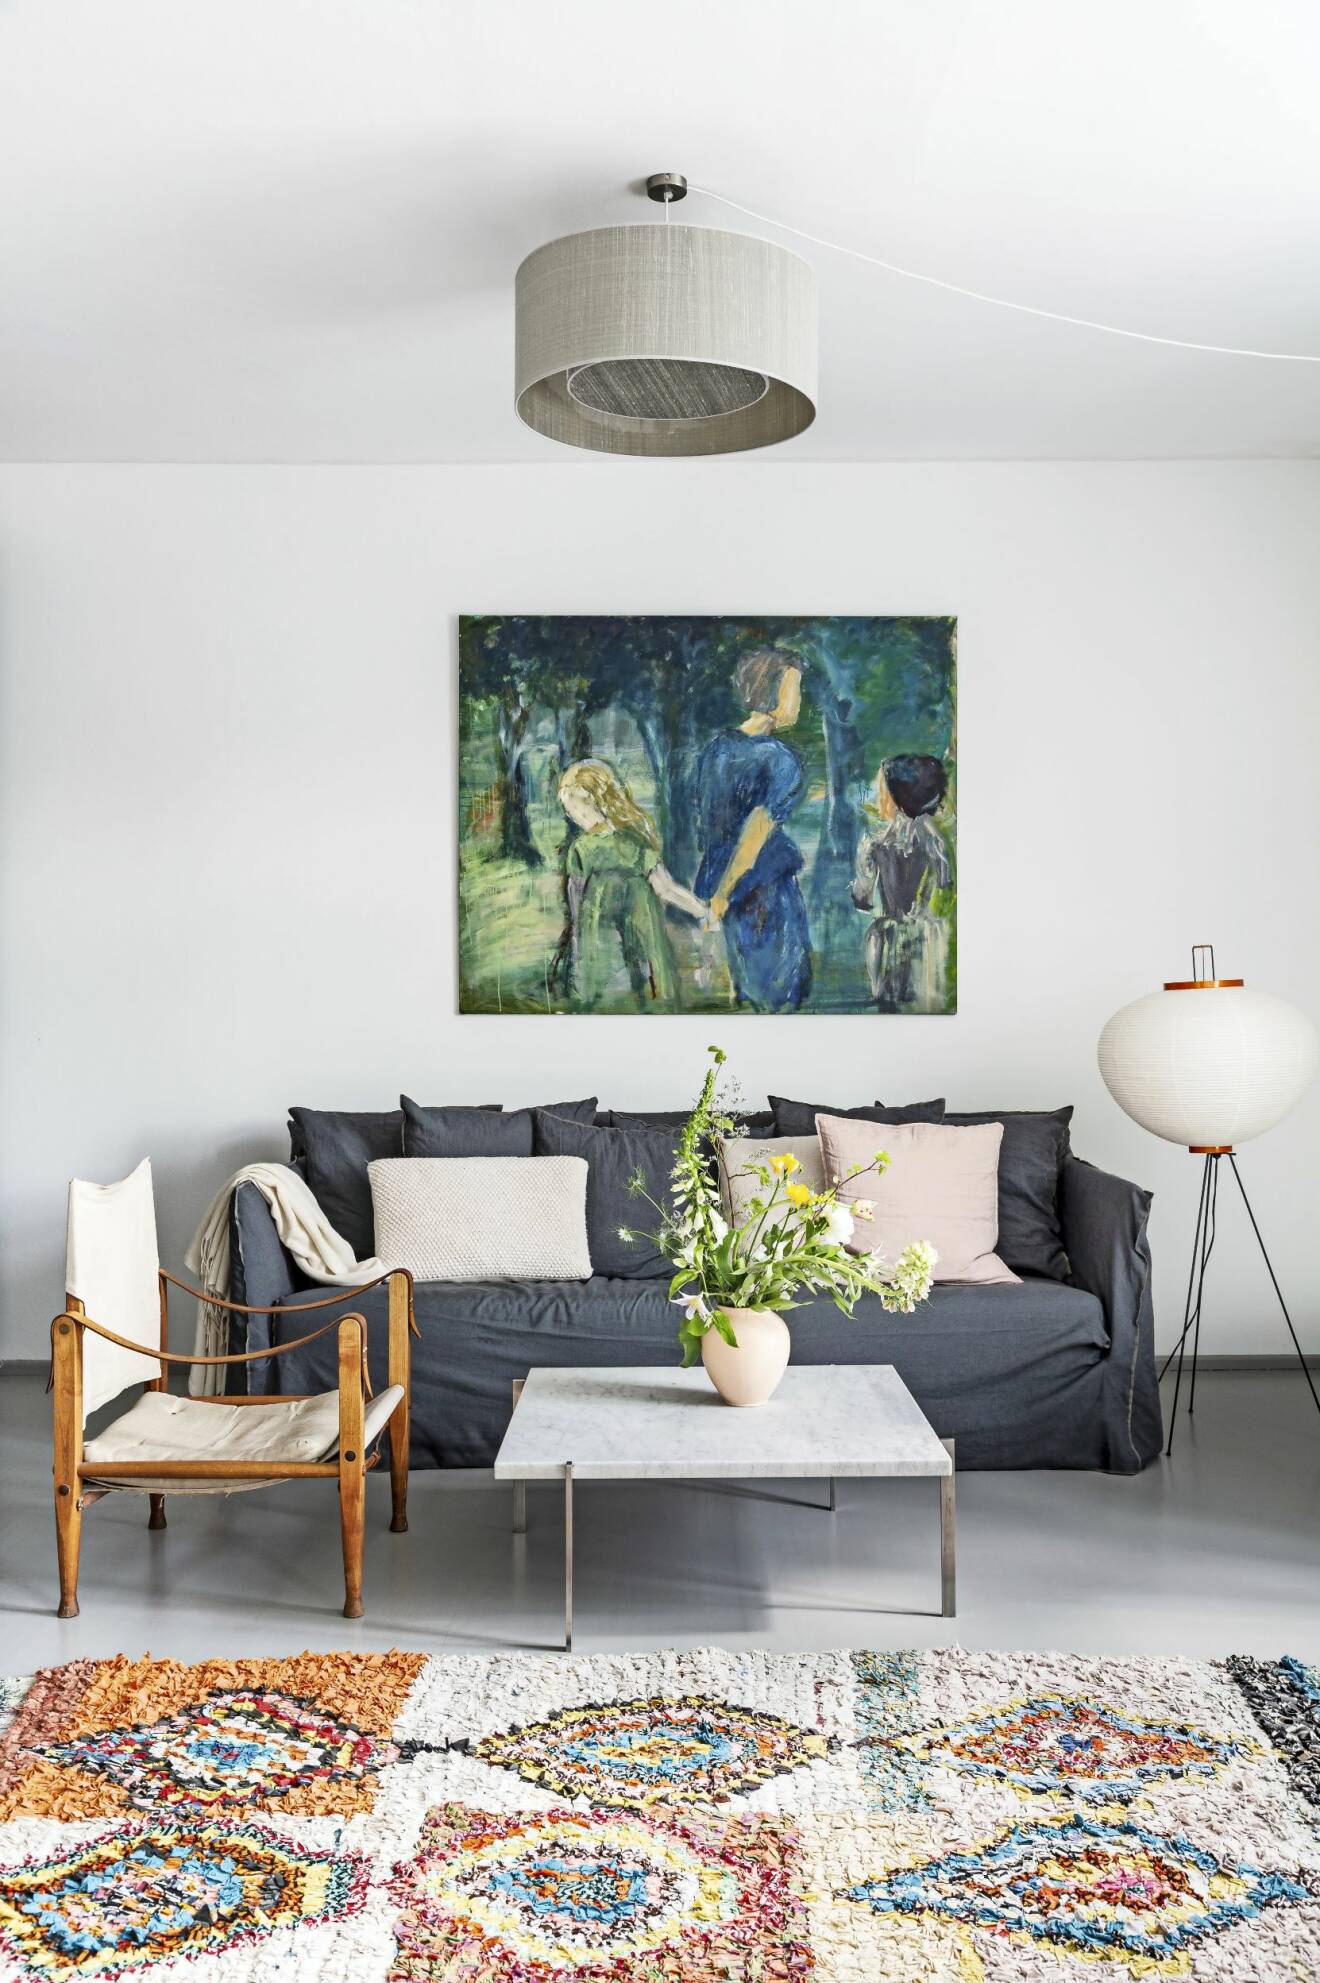 Hemma hos Mai Knauer pasteller och dansk design vardagsrum